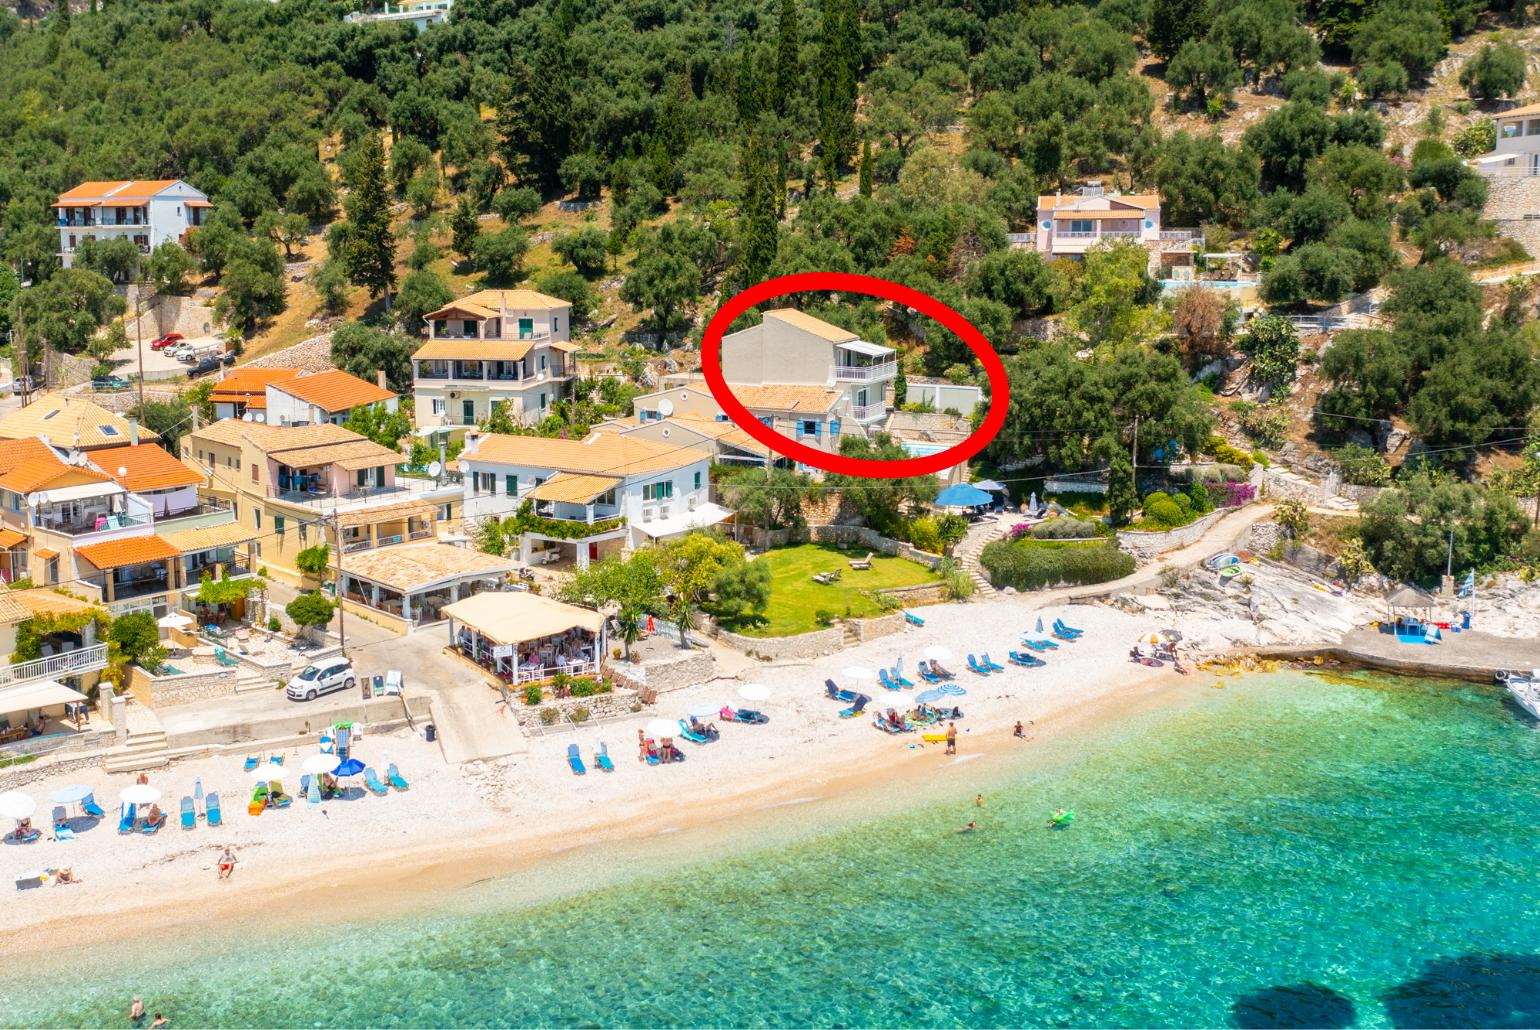 Aerial view showing location of Villa Thalassa